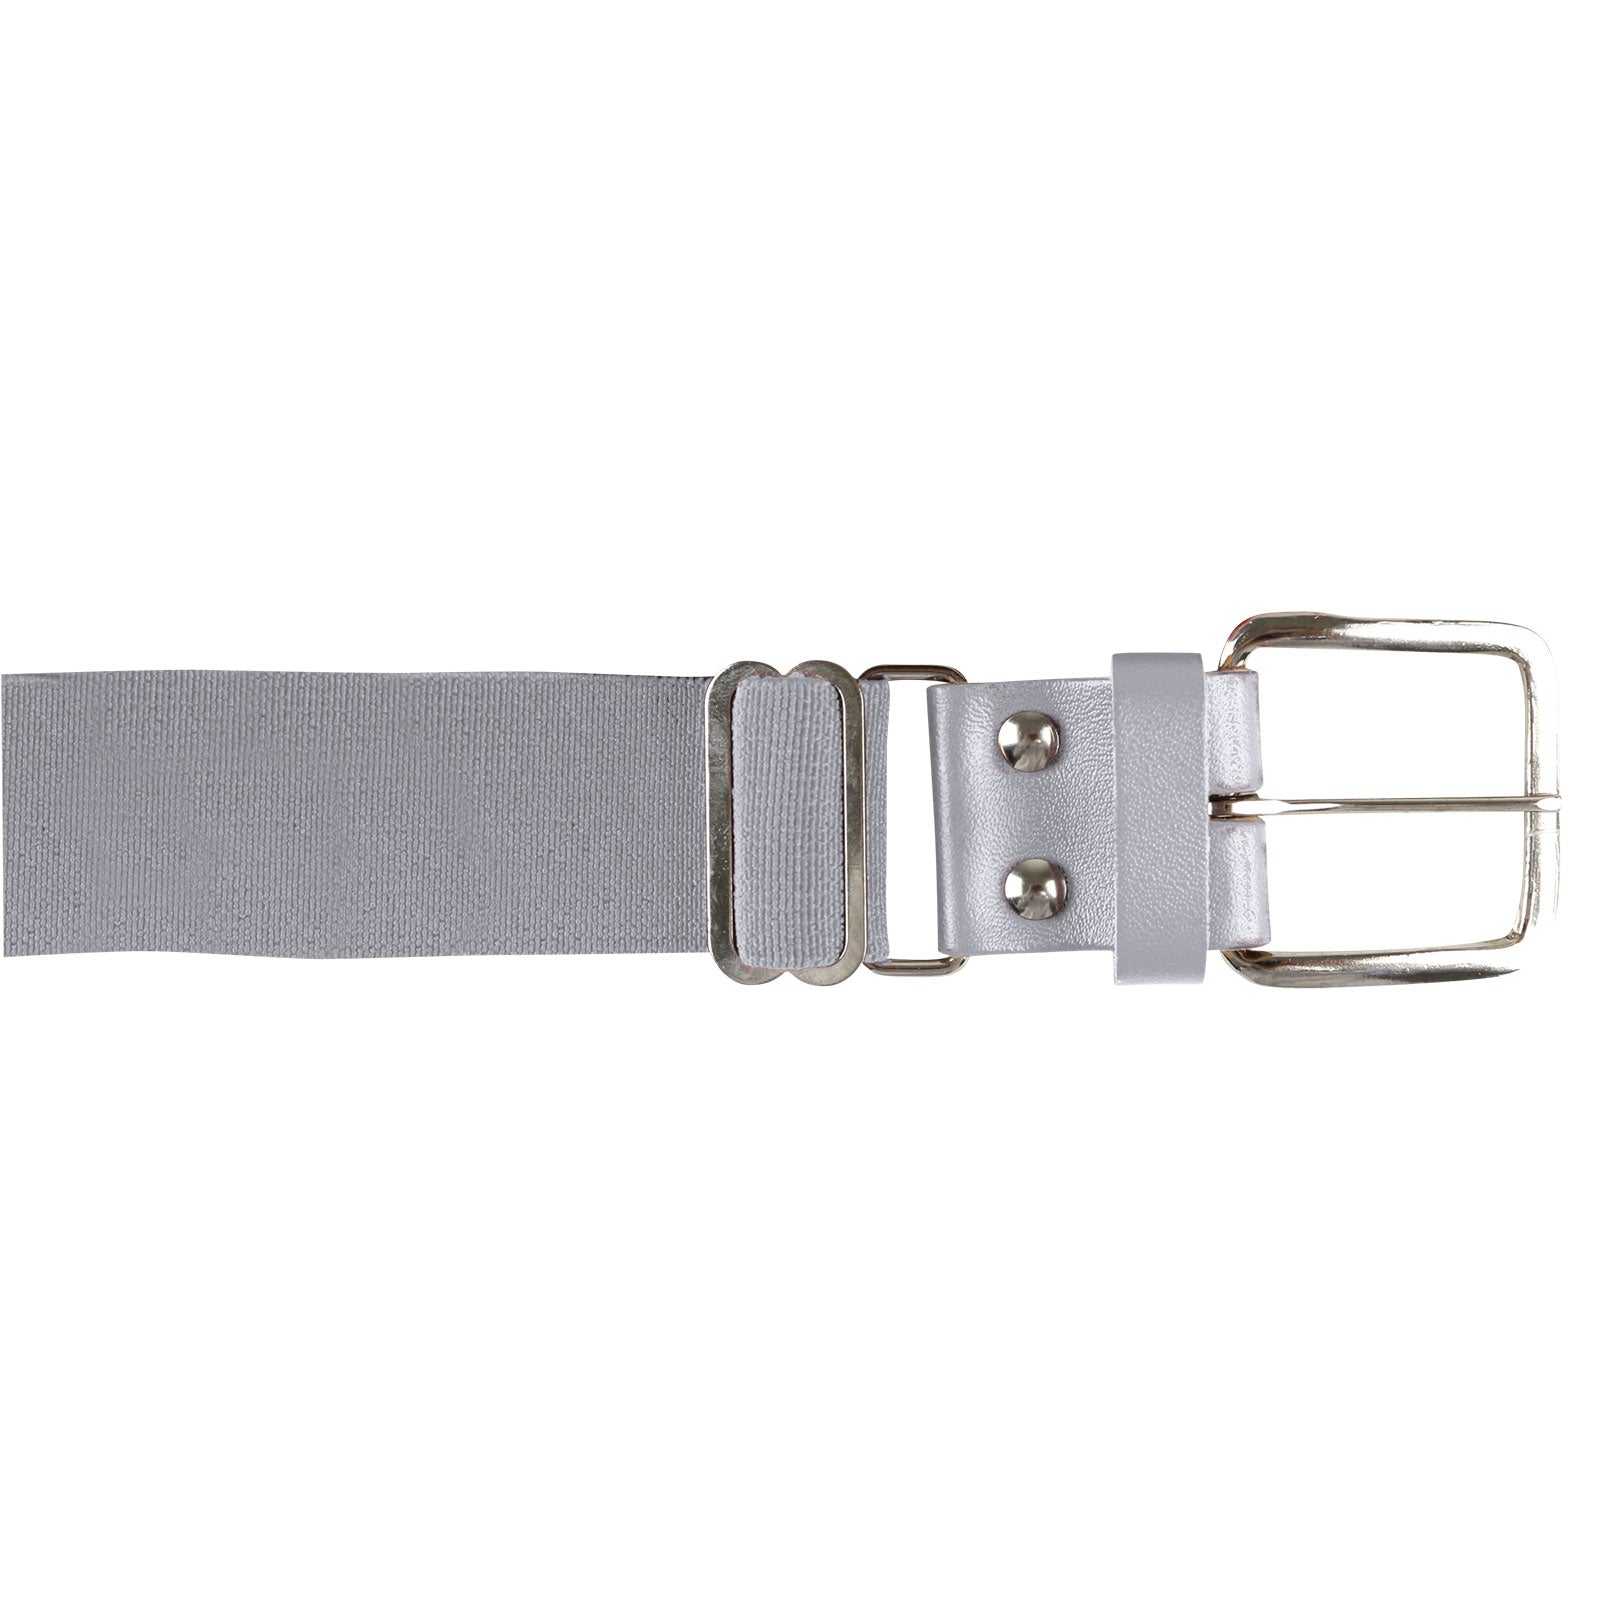 Champro A060 Brute Baseball Belt Leather Tab (6 pk) - Gray - HIT a Double